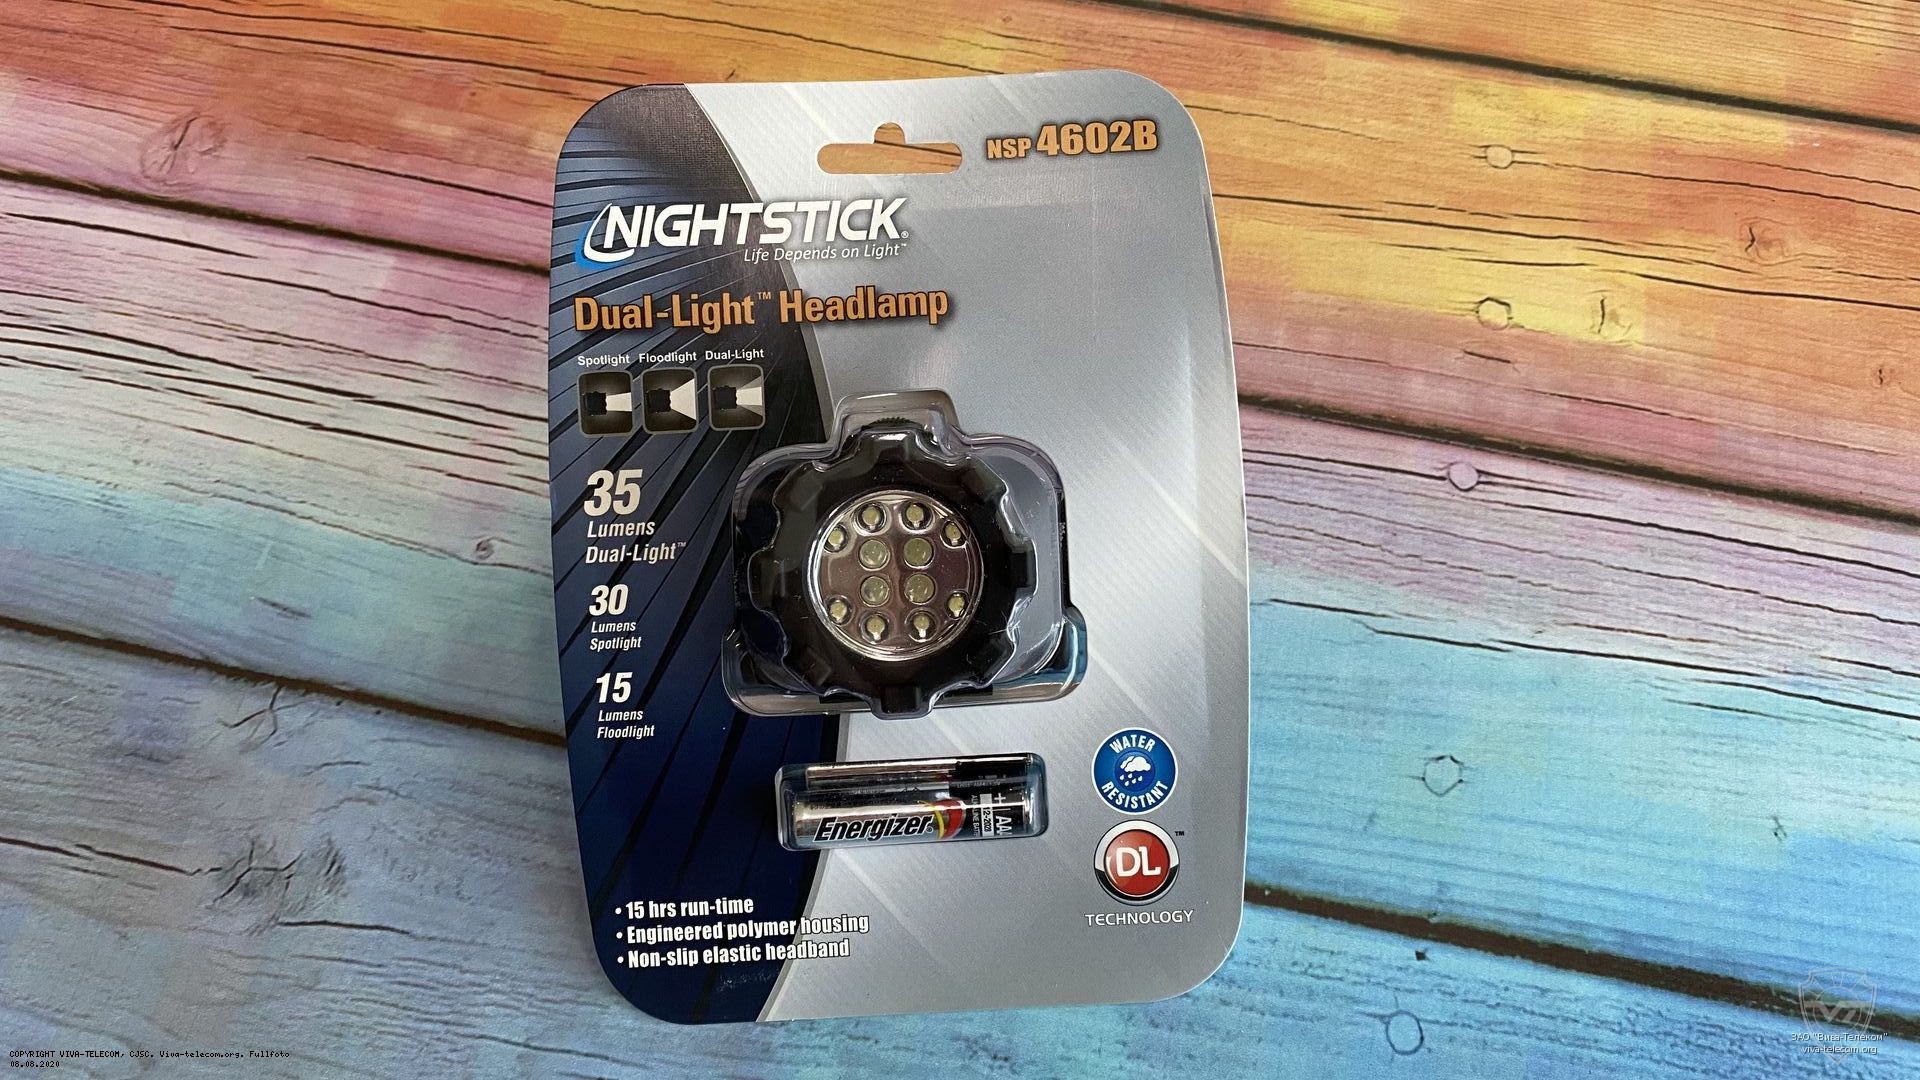   Nightstick NSP-4602B